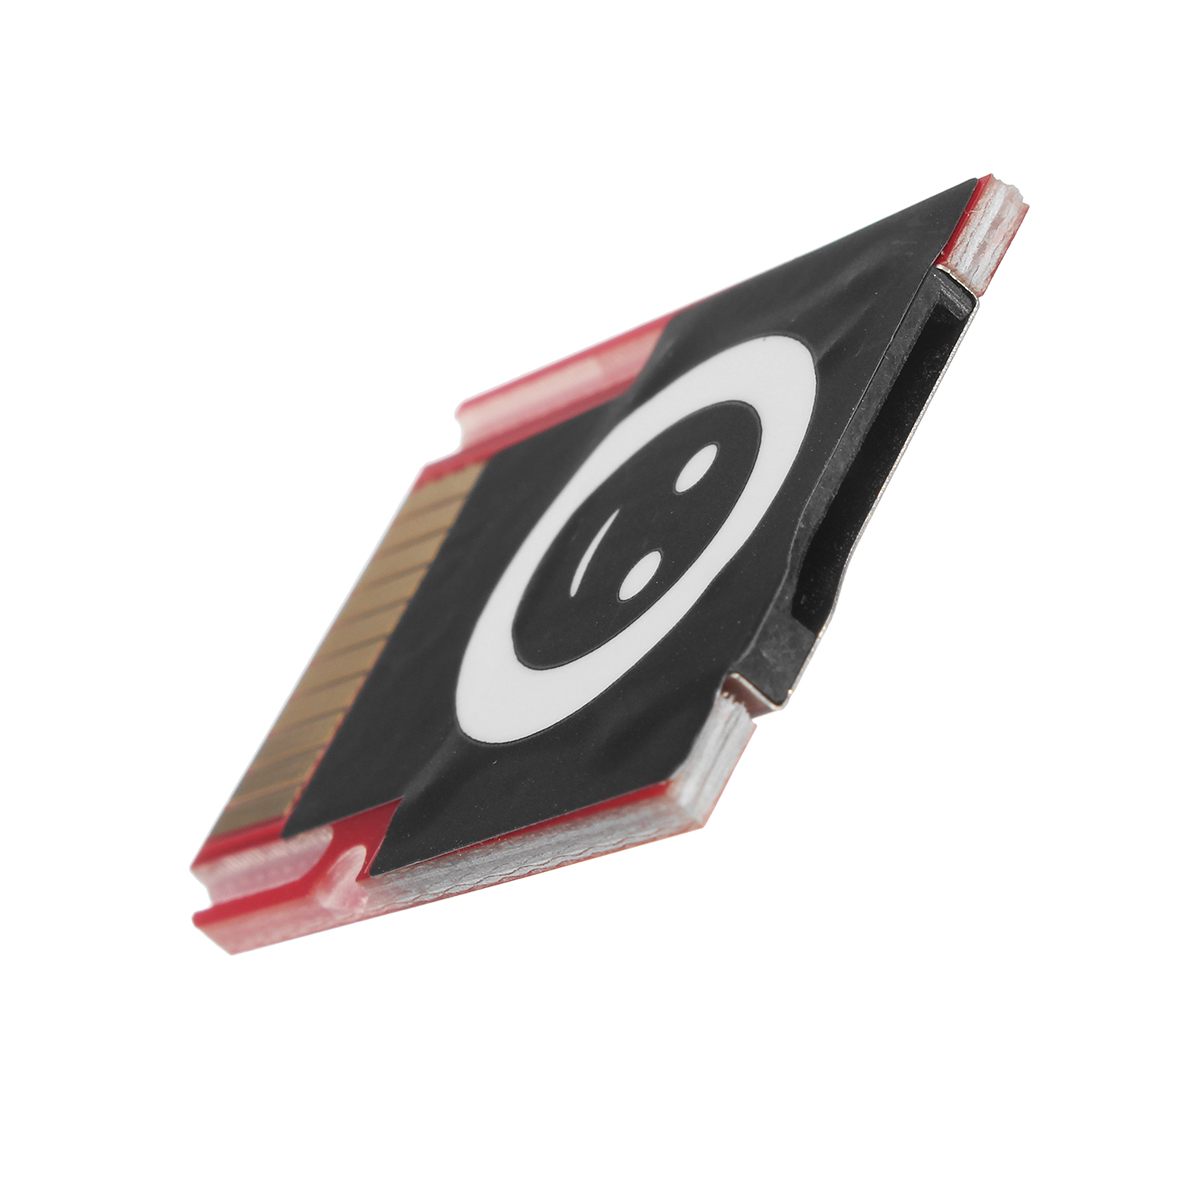 Mini-Game-Card-Cover-Adapter-For-PSVITA-SD2-Vita-PS-Vita-1000-2000-SD-Memory-Card-1207134-6